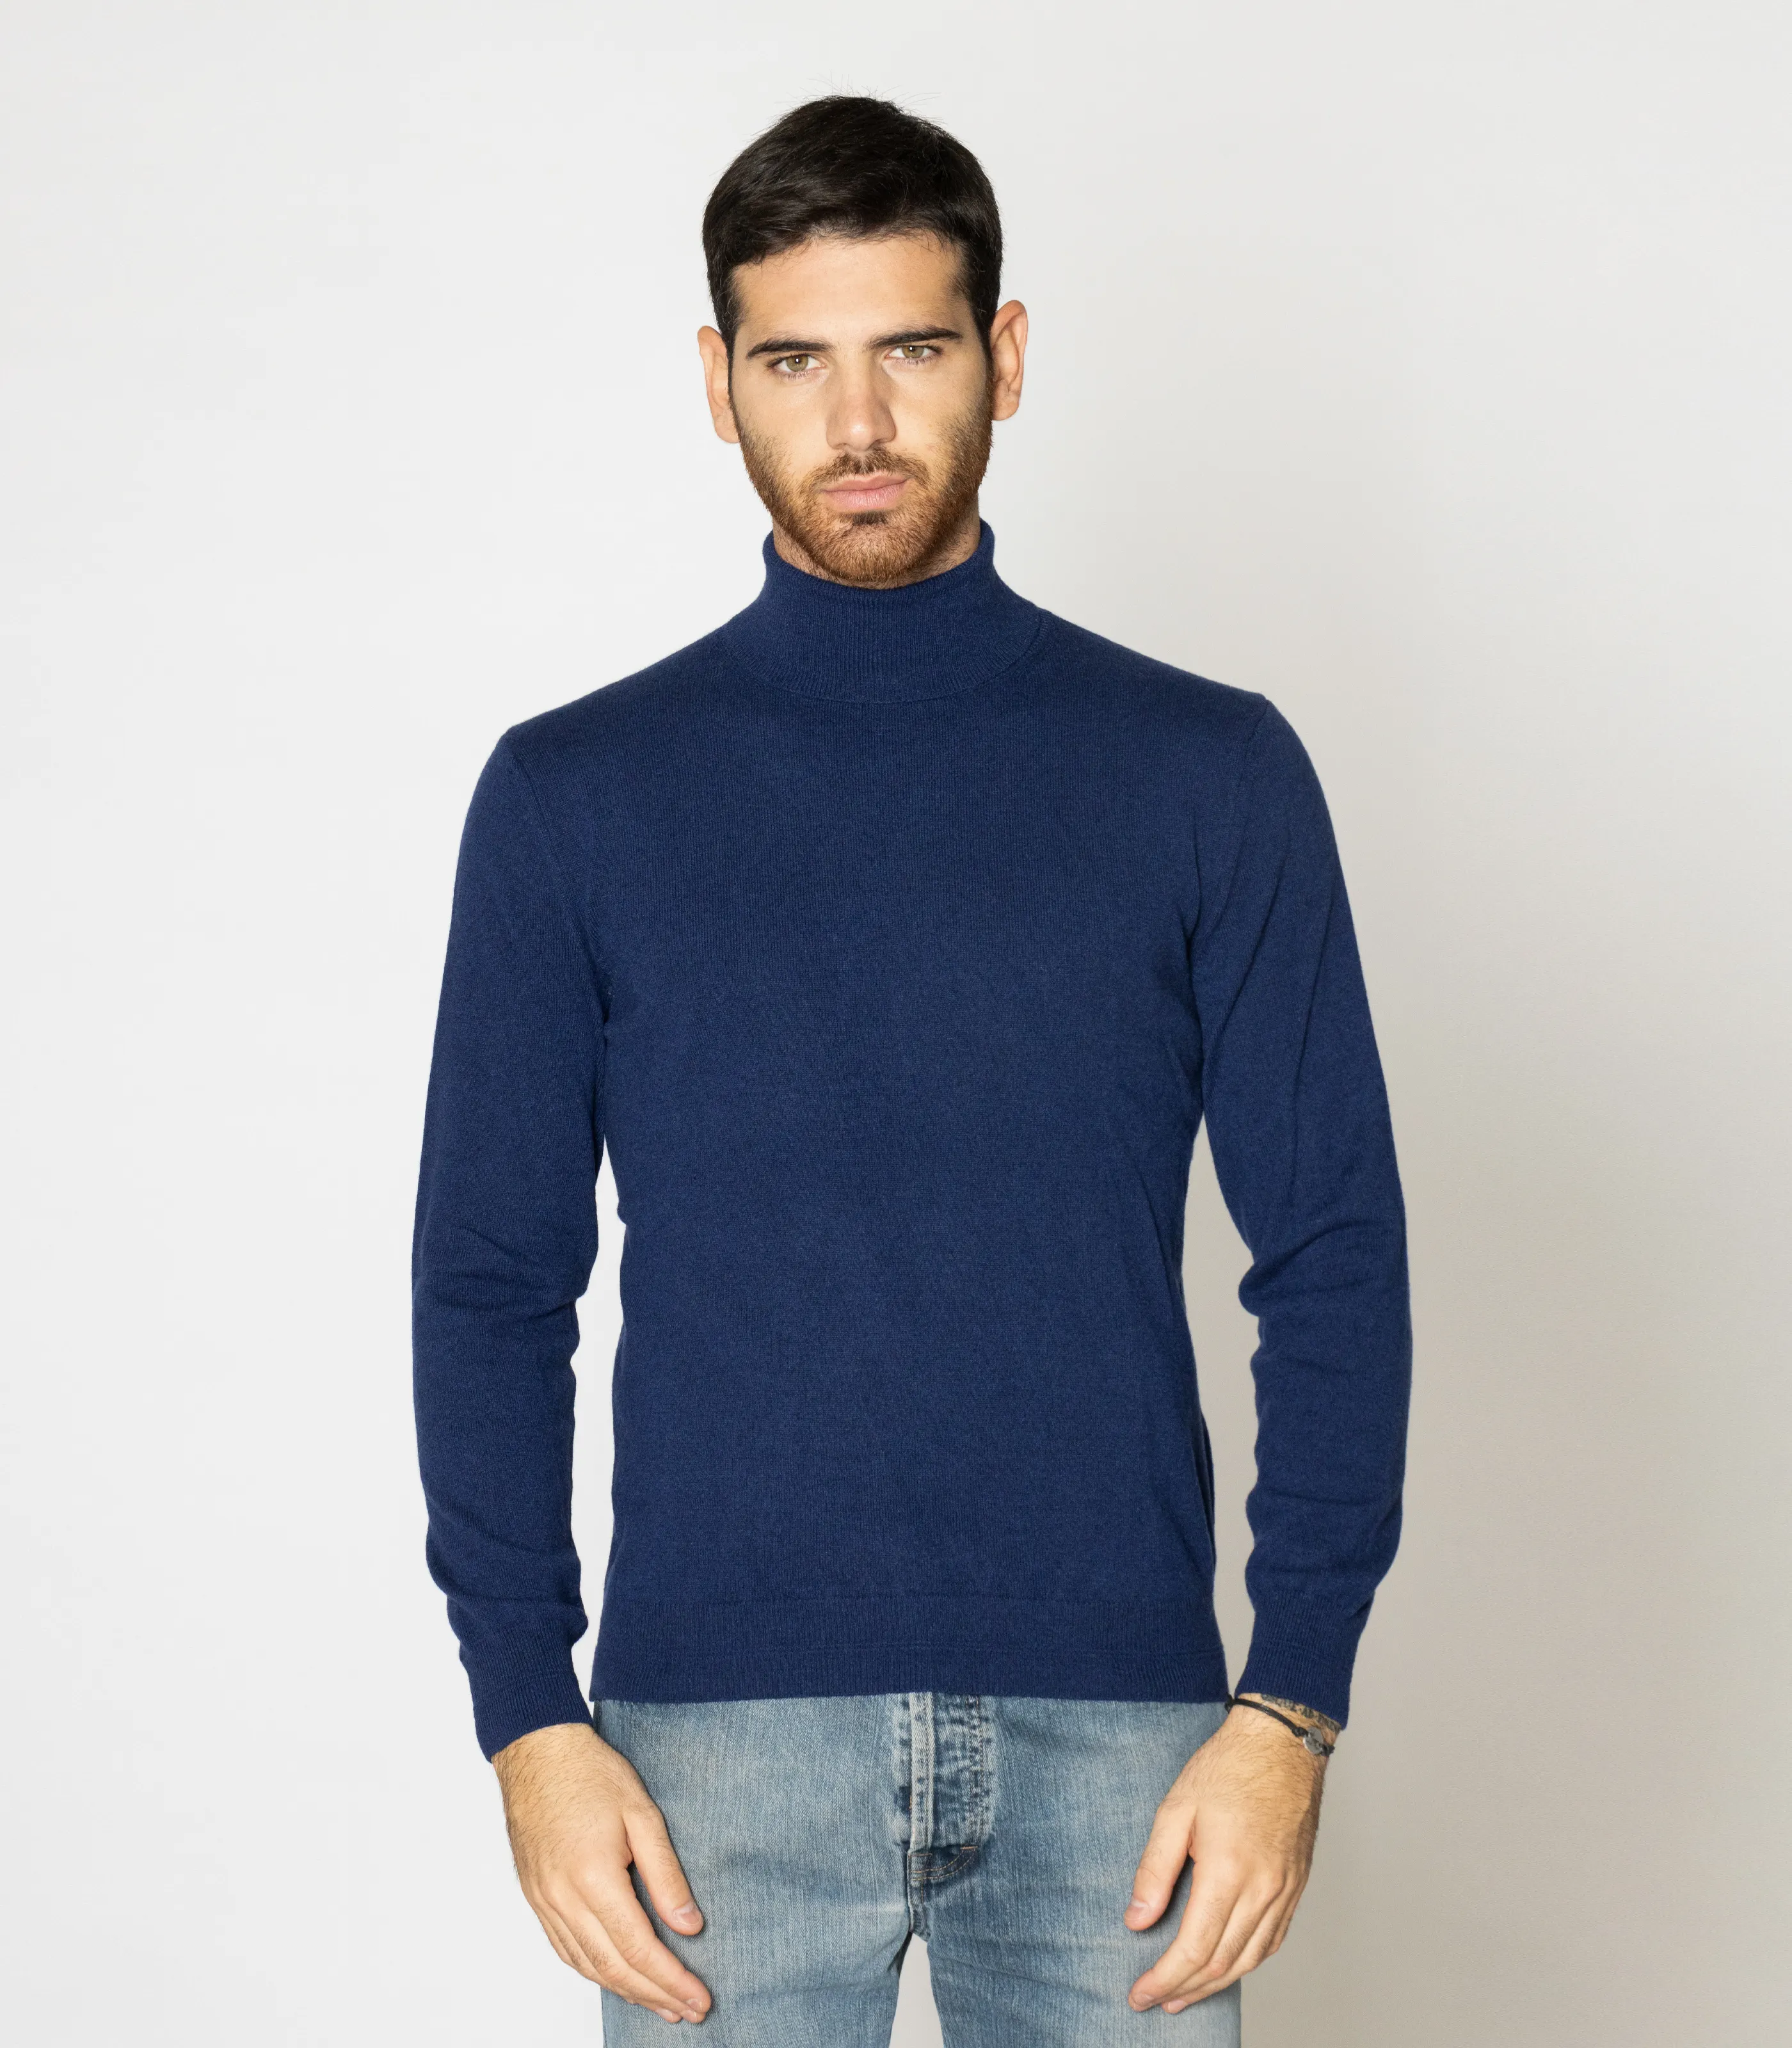 Superior quality wholesale mens clothing hand knitting yarn cashmere sweater men long sleeve blue turtleneck